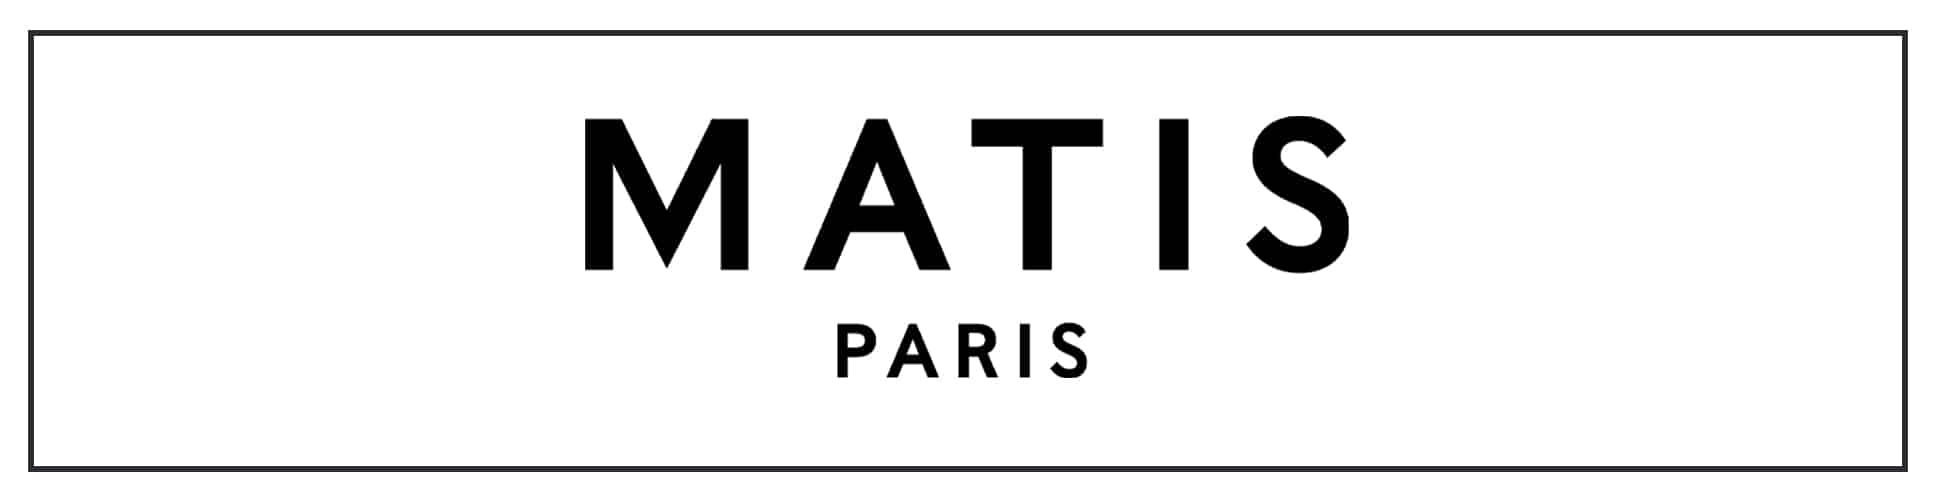 Matis paris logo on a white background.